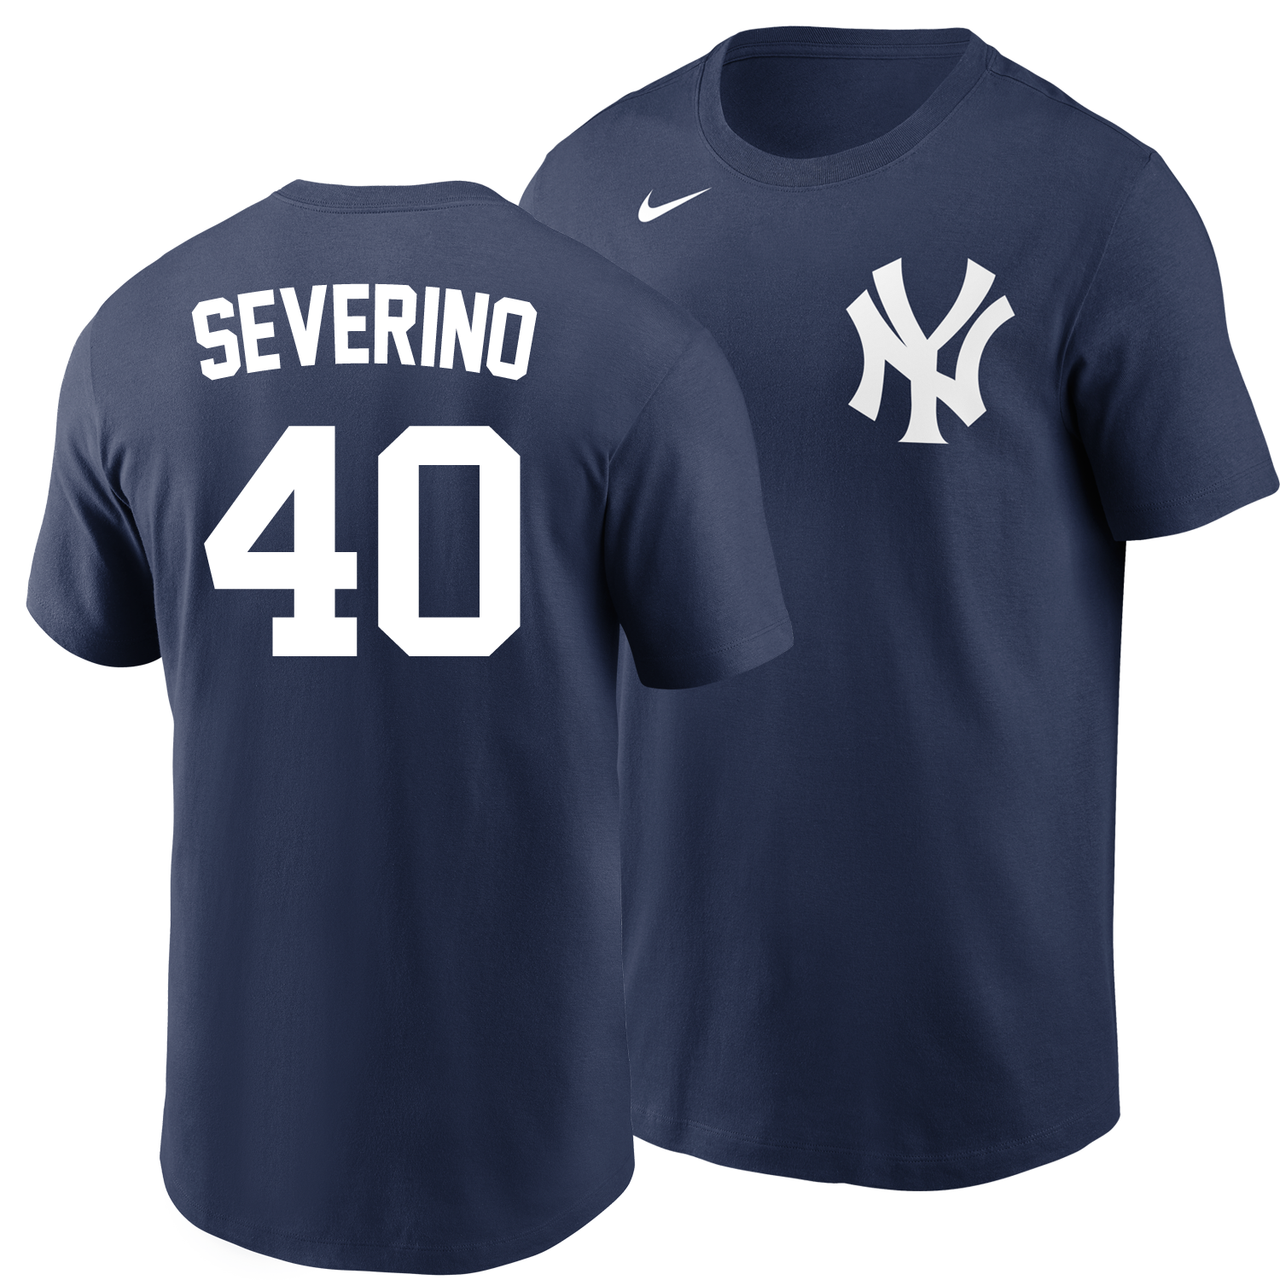 Yankees kids Shirt